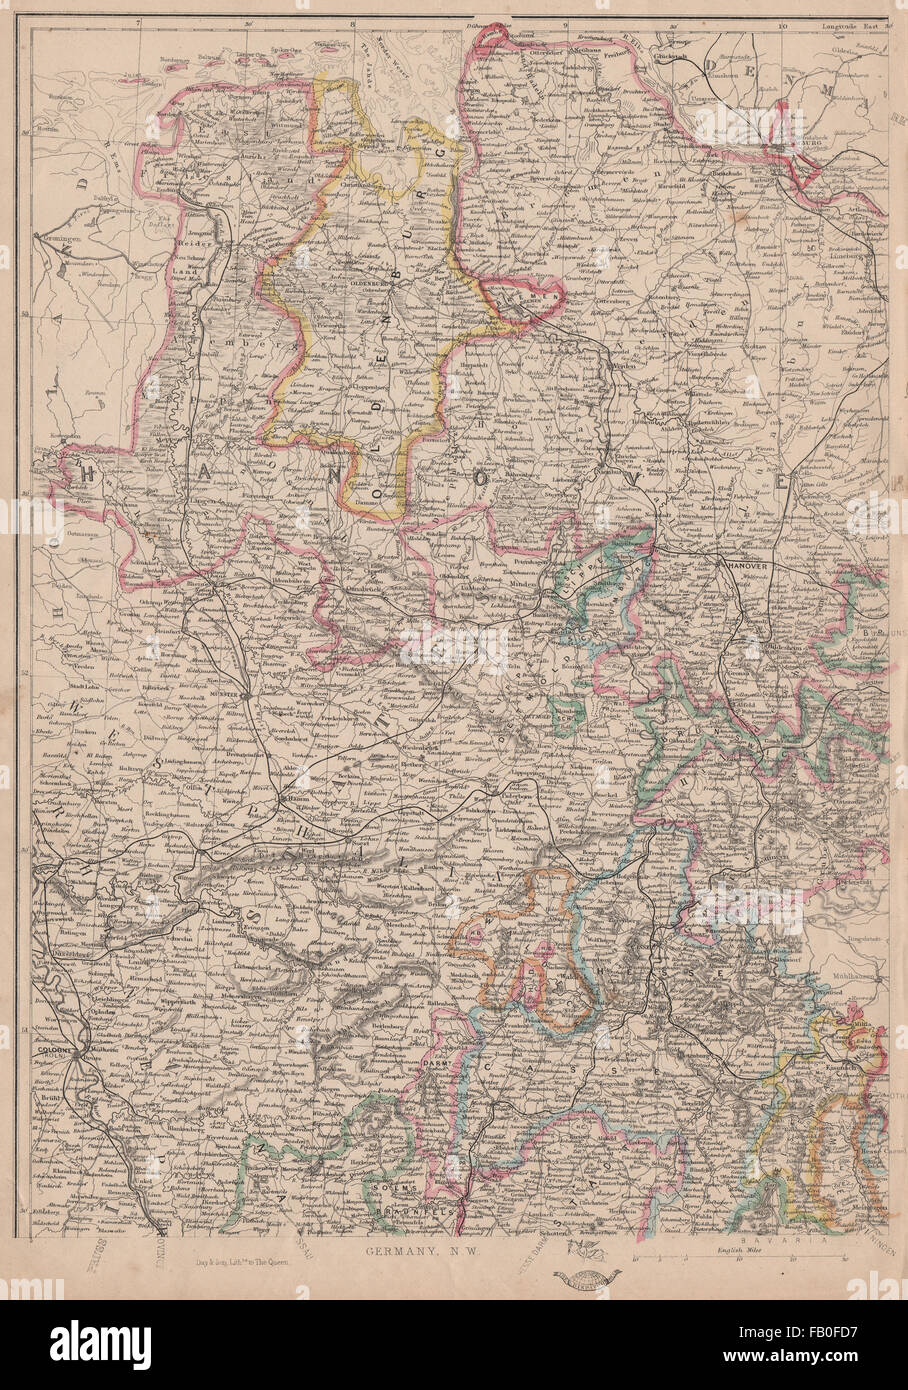 West germany map -Fotos und -Bildmaterial in hoher Auflösung – Alamy